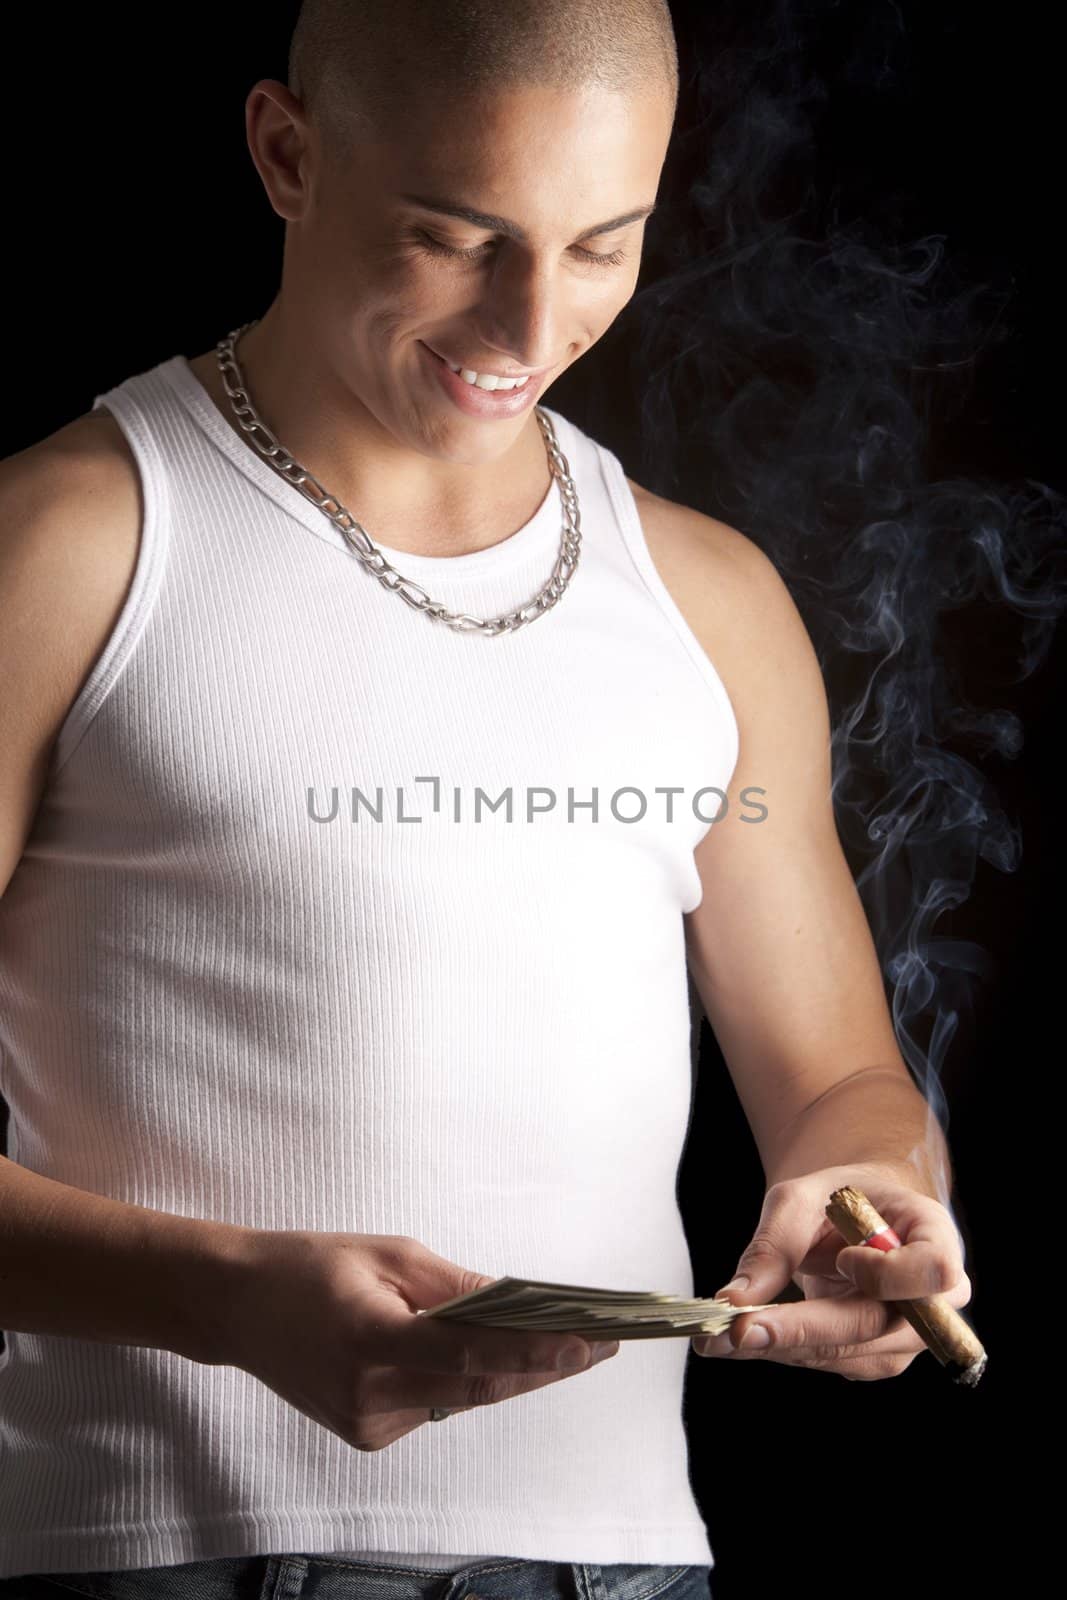 A good looking, muscular built, man on a black background smoking cigar.